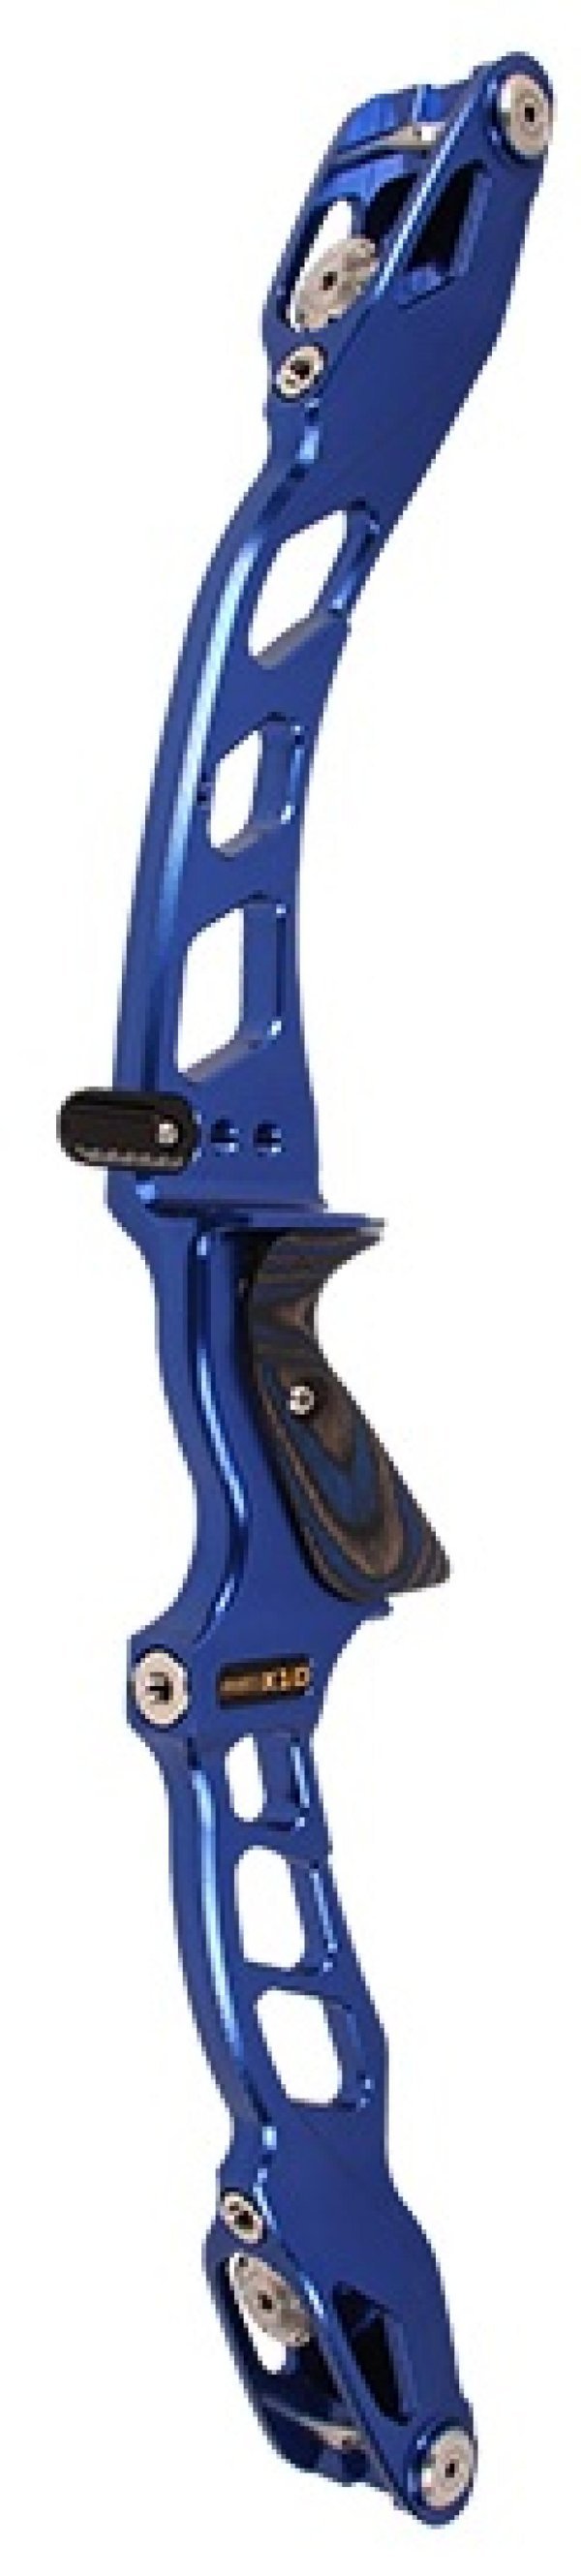 SANLIDA SIGHTCLE X10 BOW RISER BOLT ADJUSTMENT DARK BLUE 25